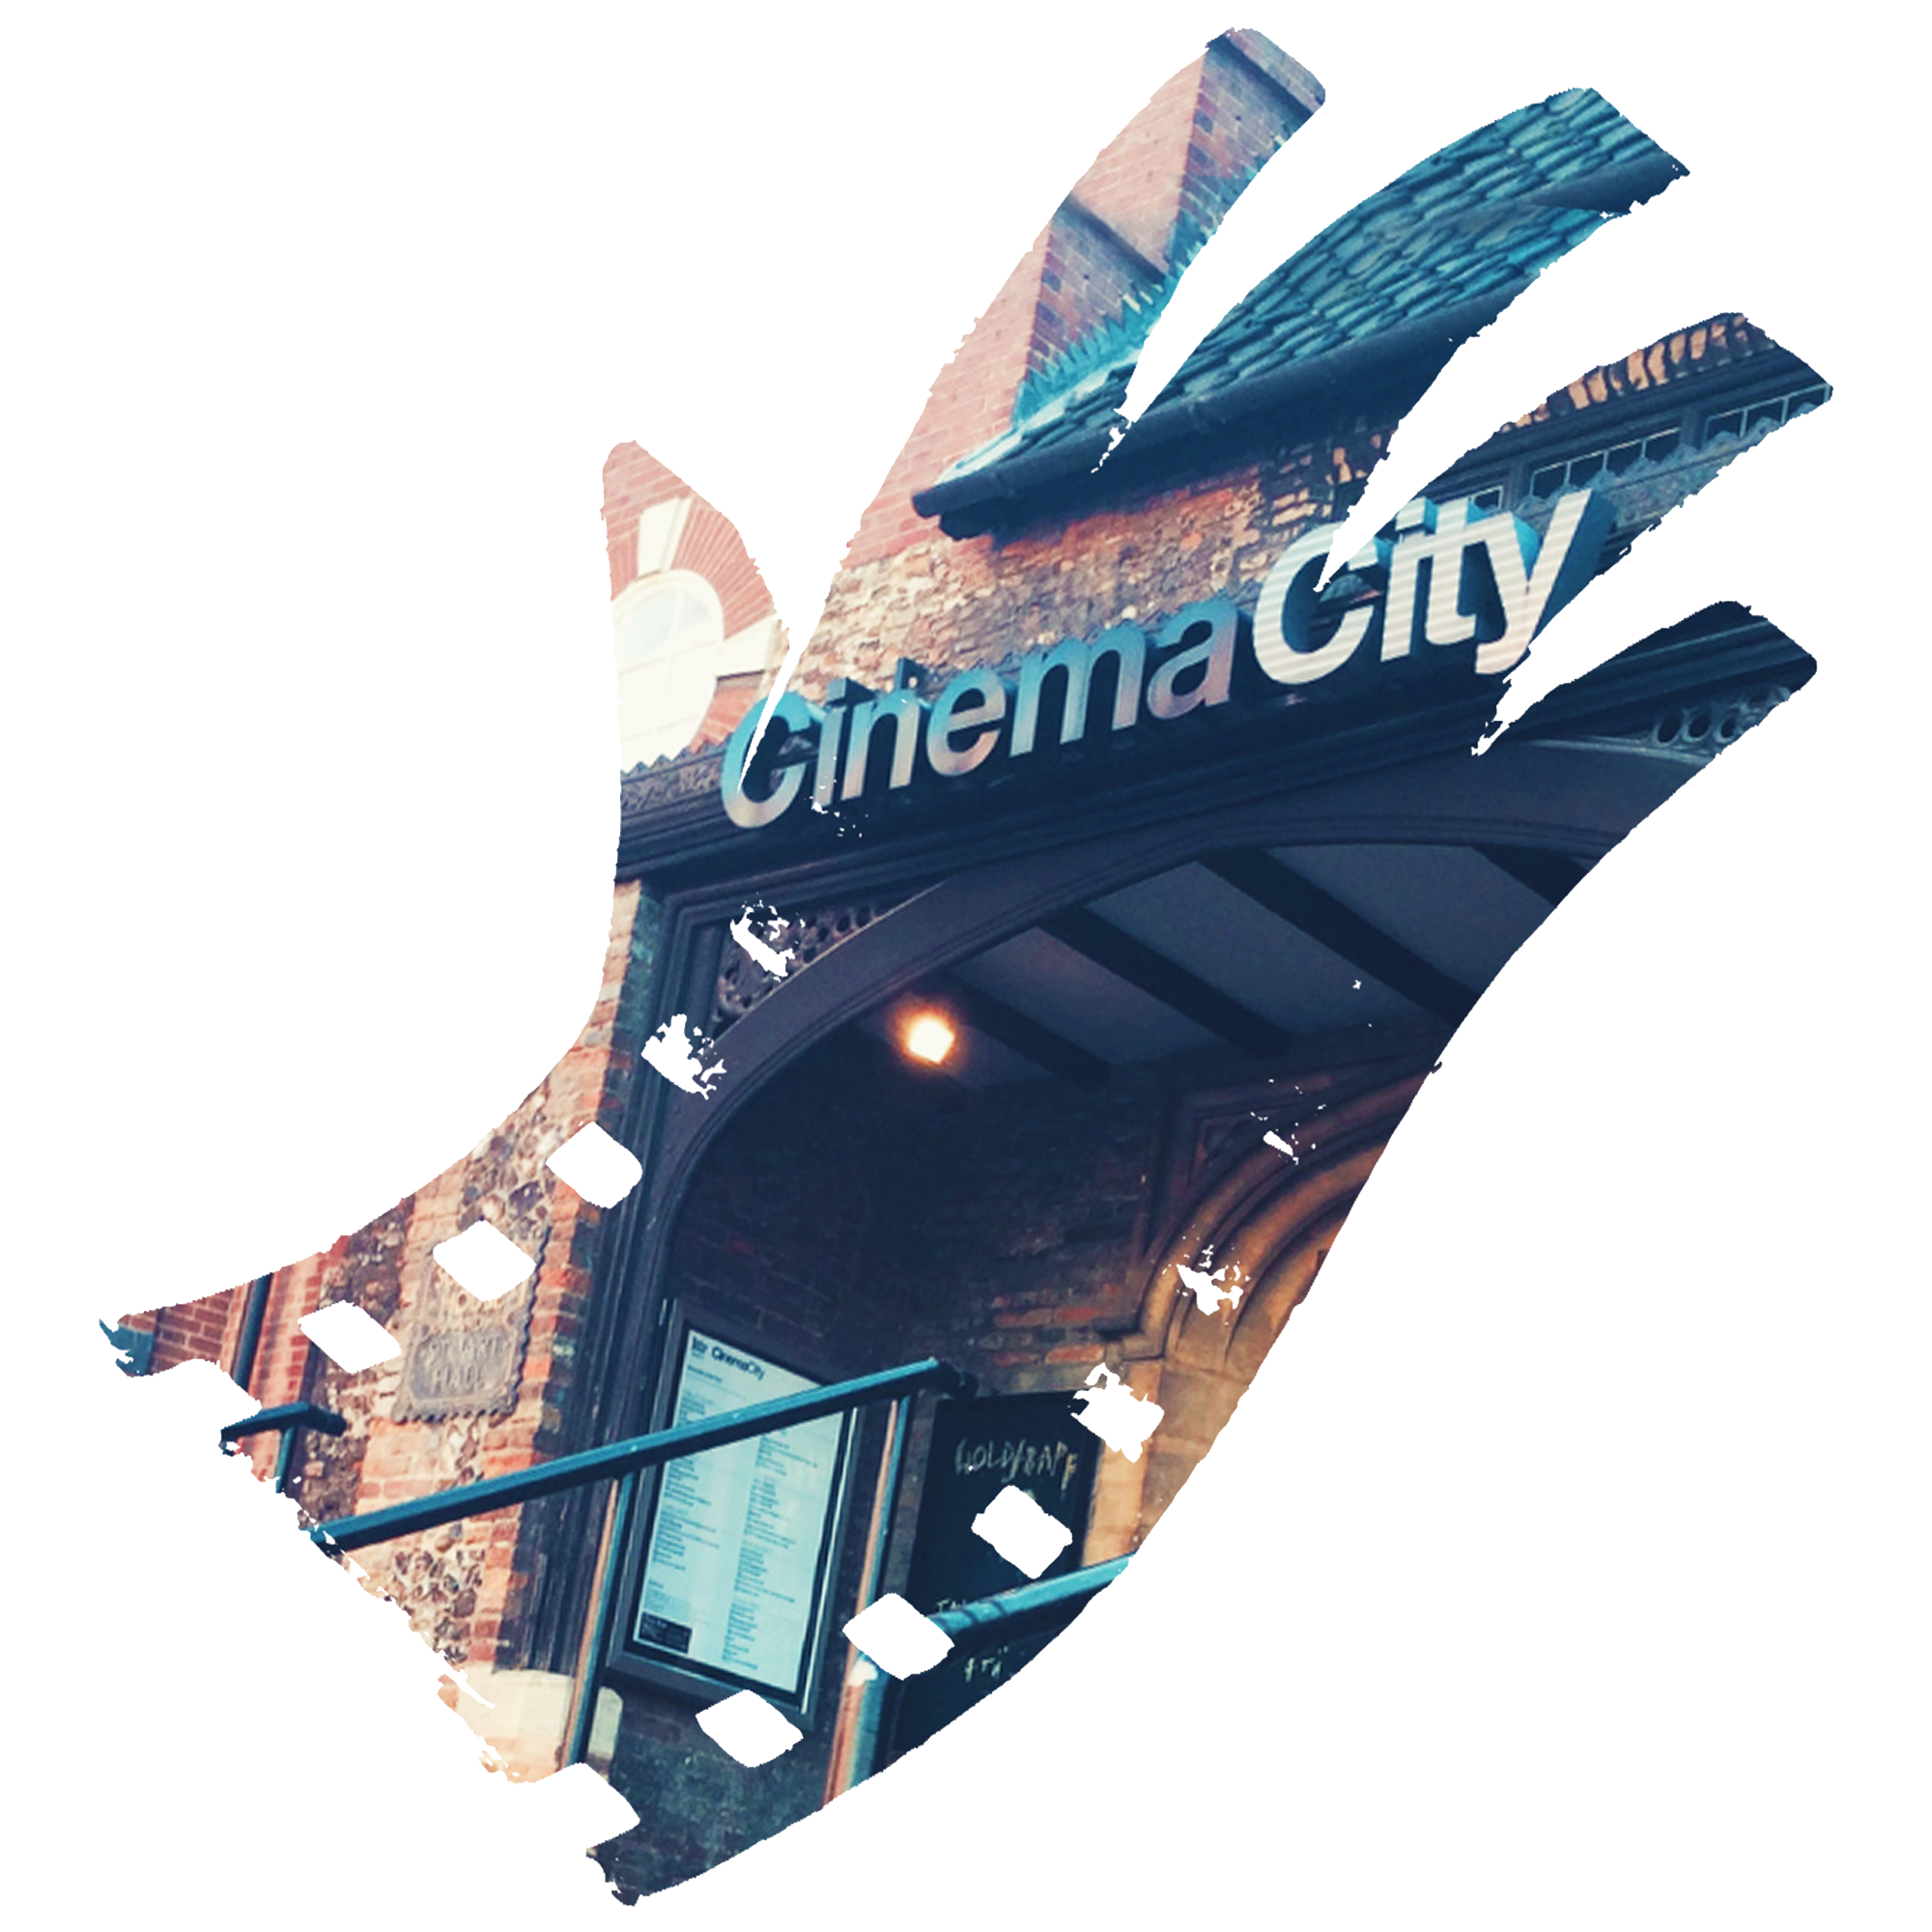 cinema city film quiz logo